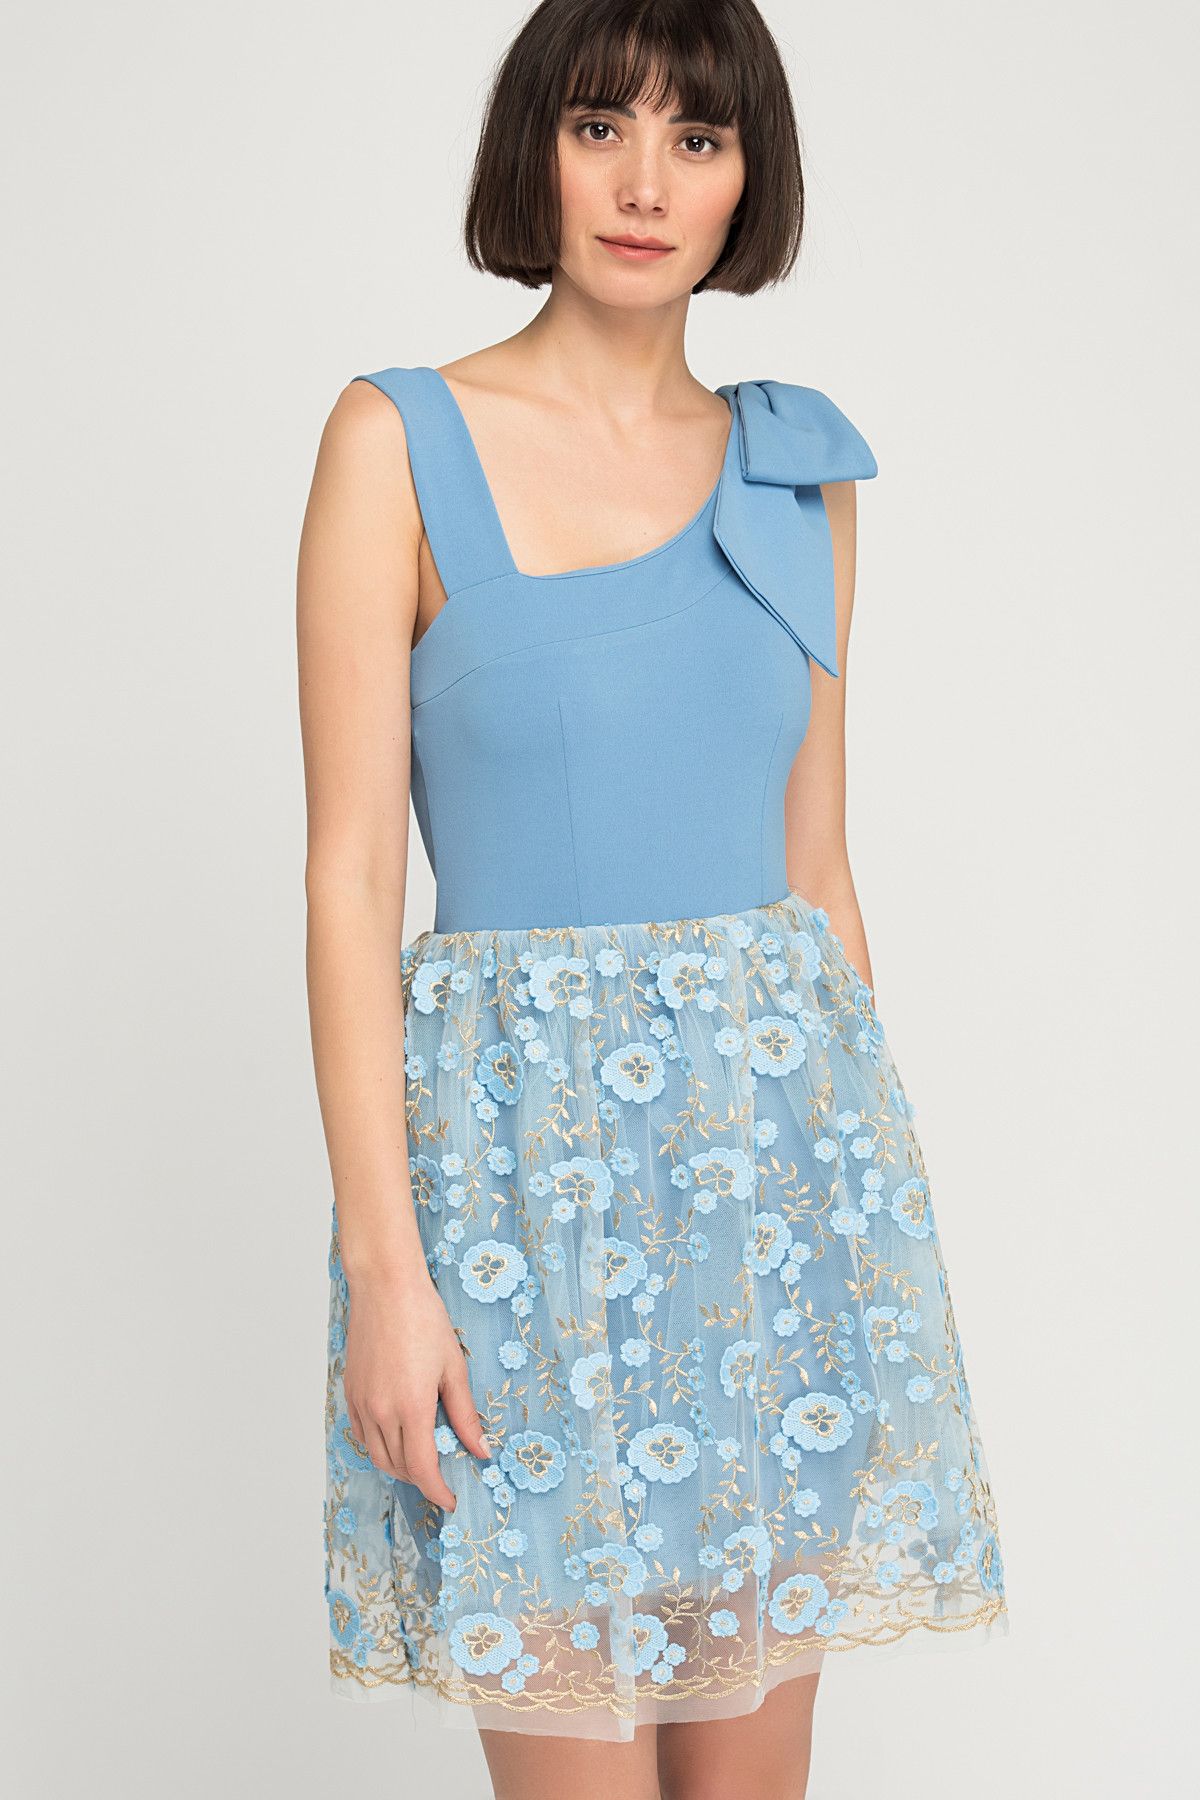 Home Store Kadın Mavi Elbise 17101079956